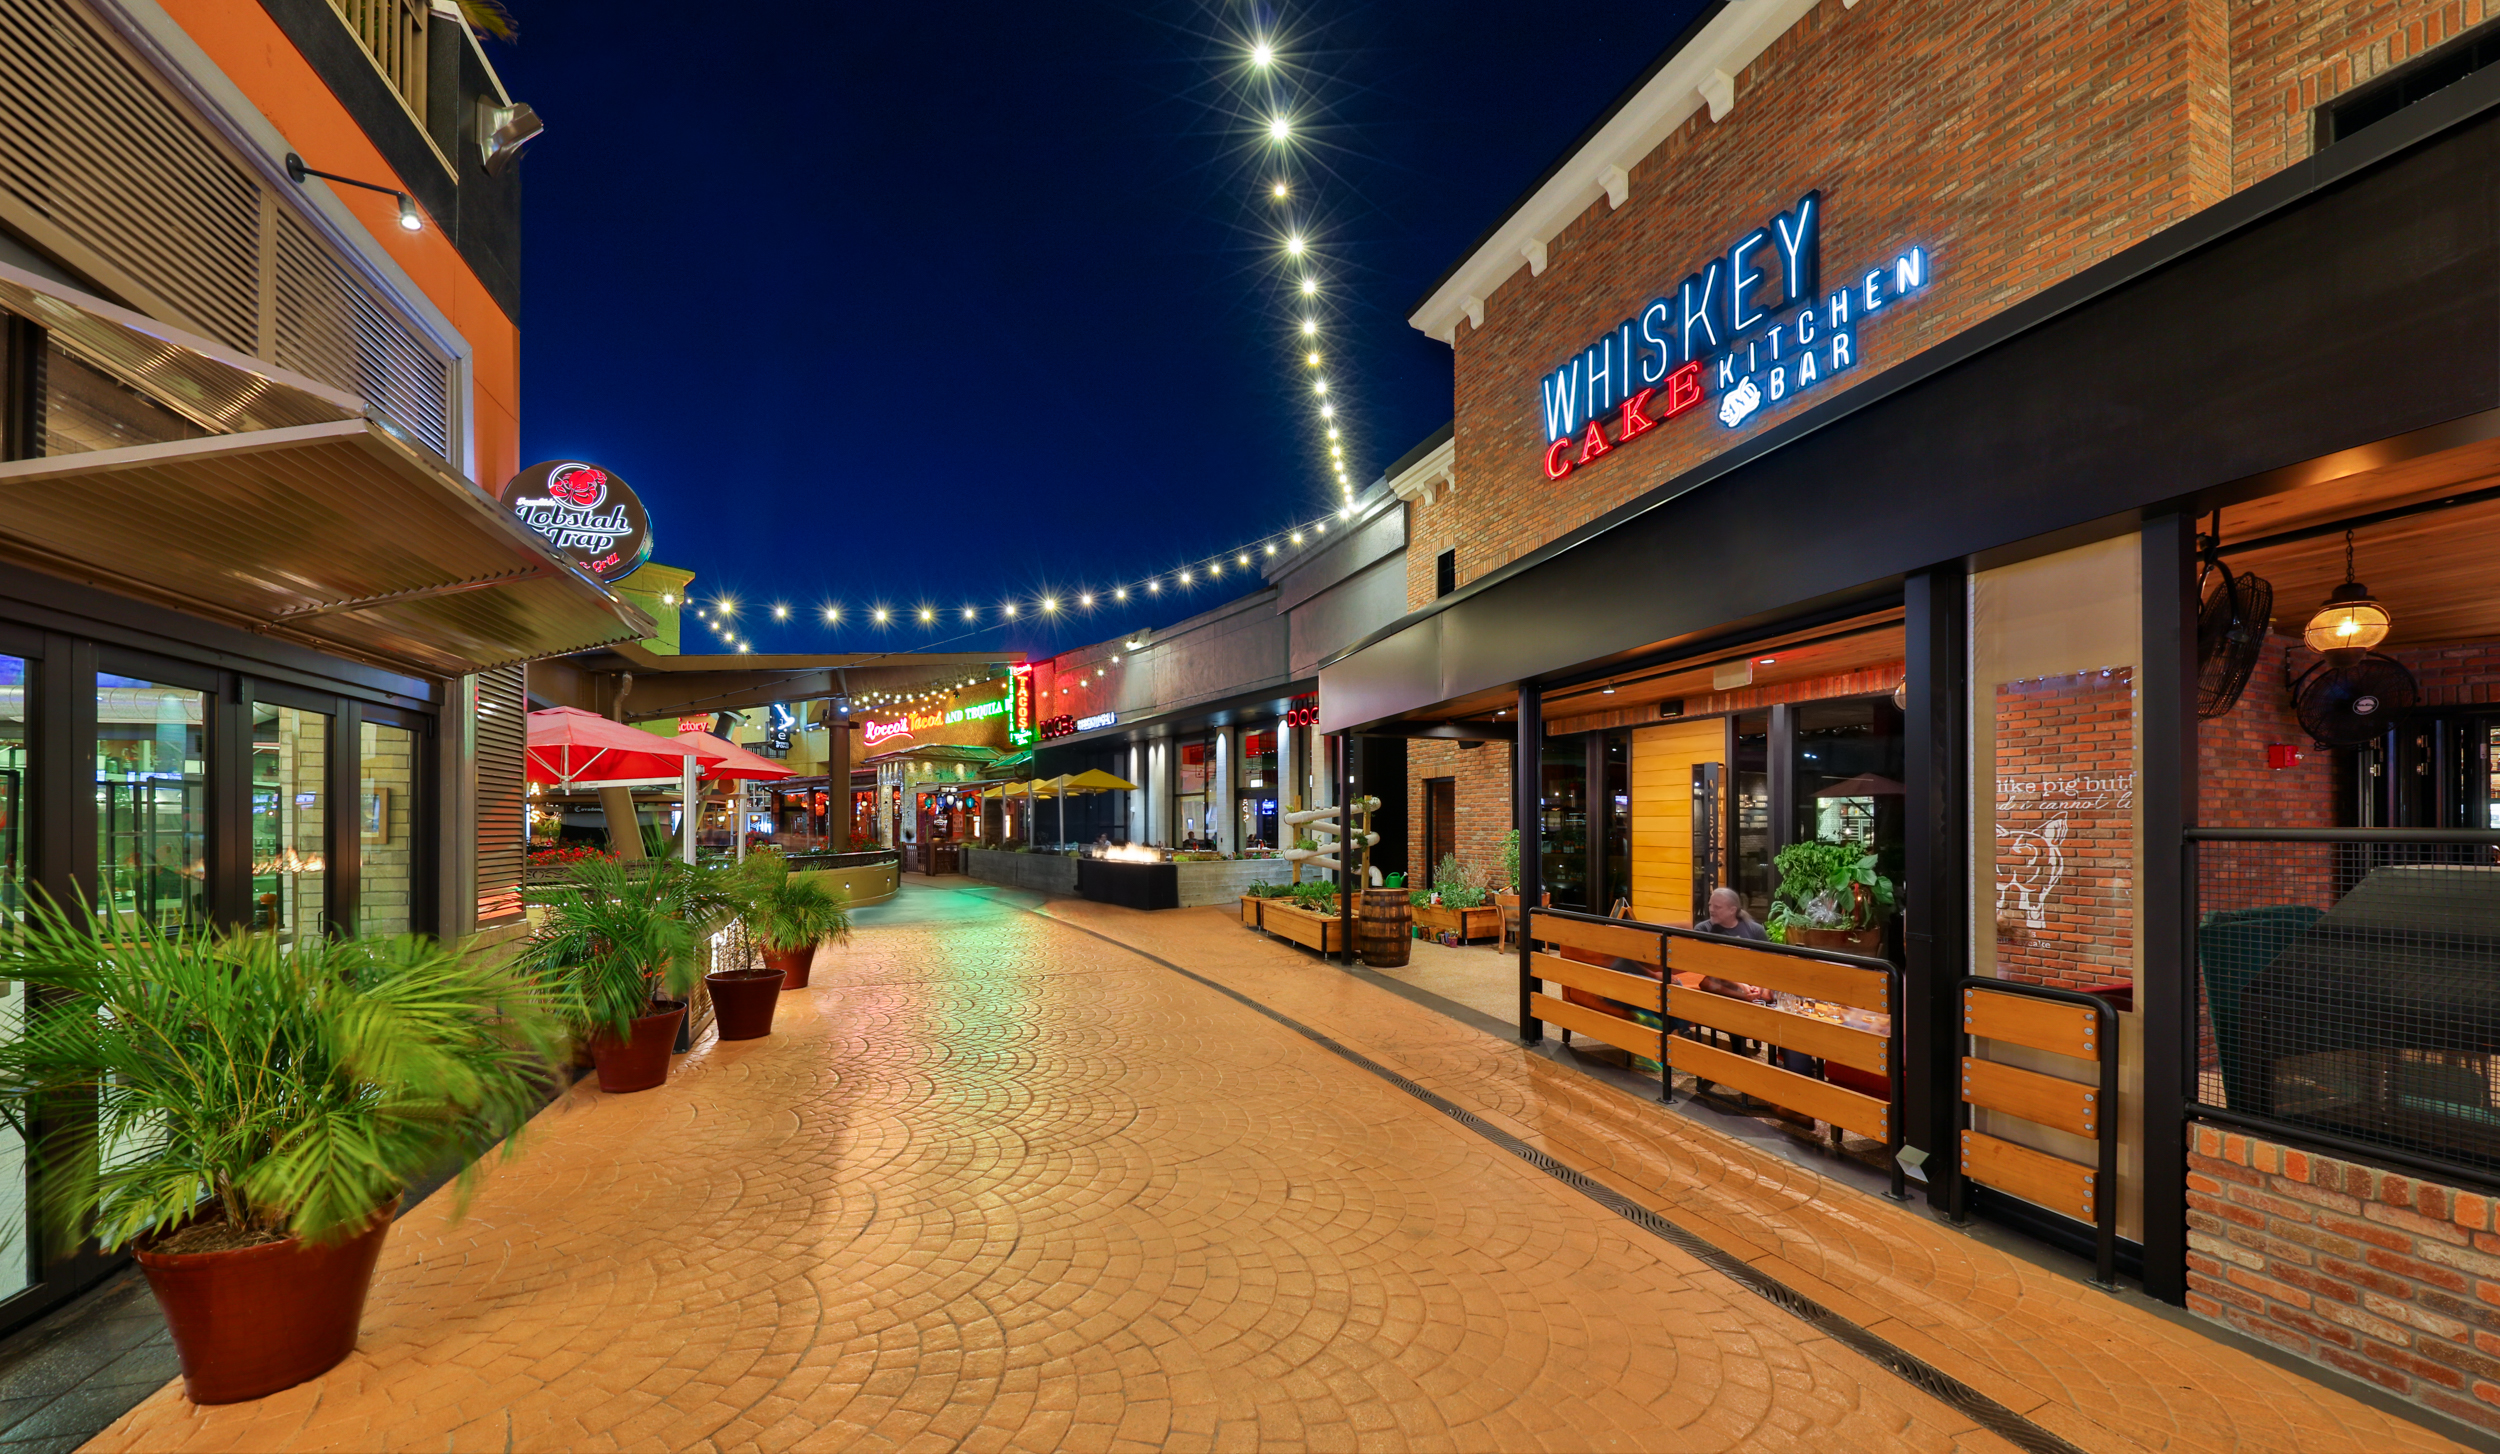 International Plaza and Bay Street Mall, Tampa, FL Stock Photo - Alamy